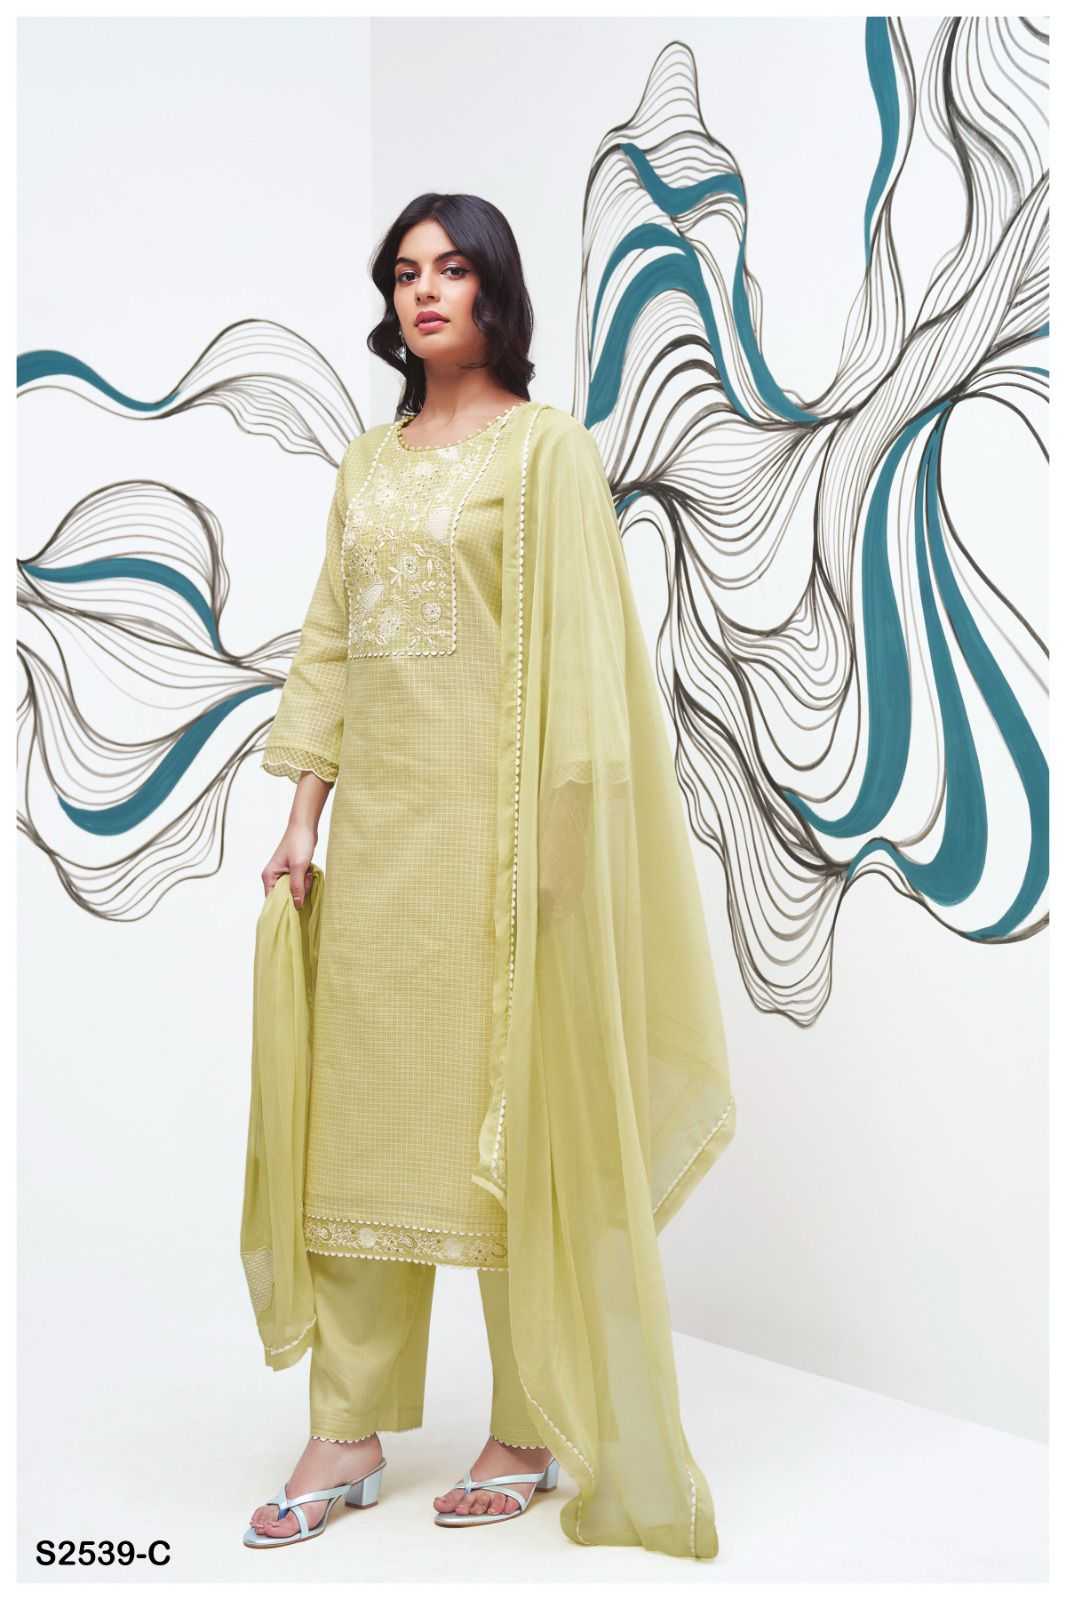 Ganga RYLAN 2539 Dress Materials Wholesale catalog